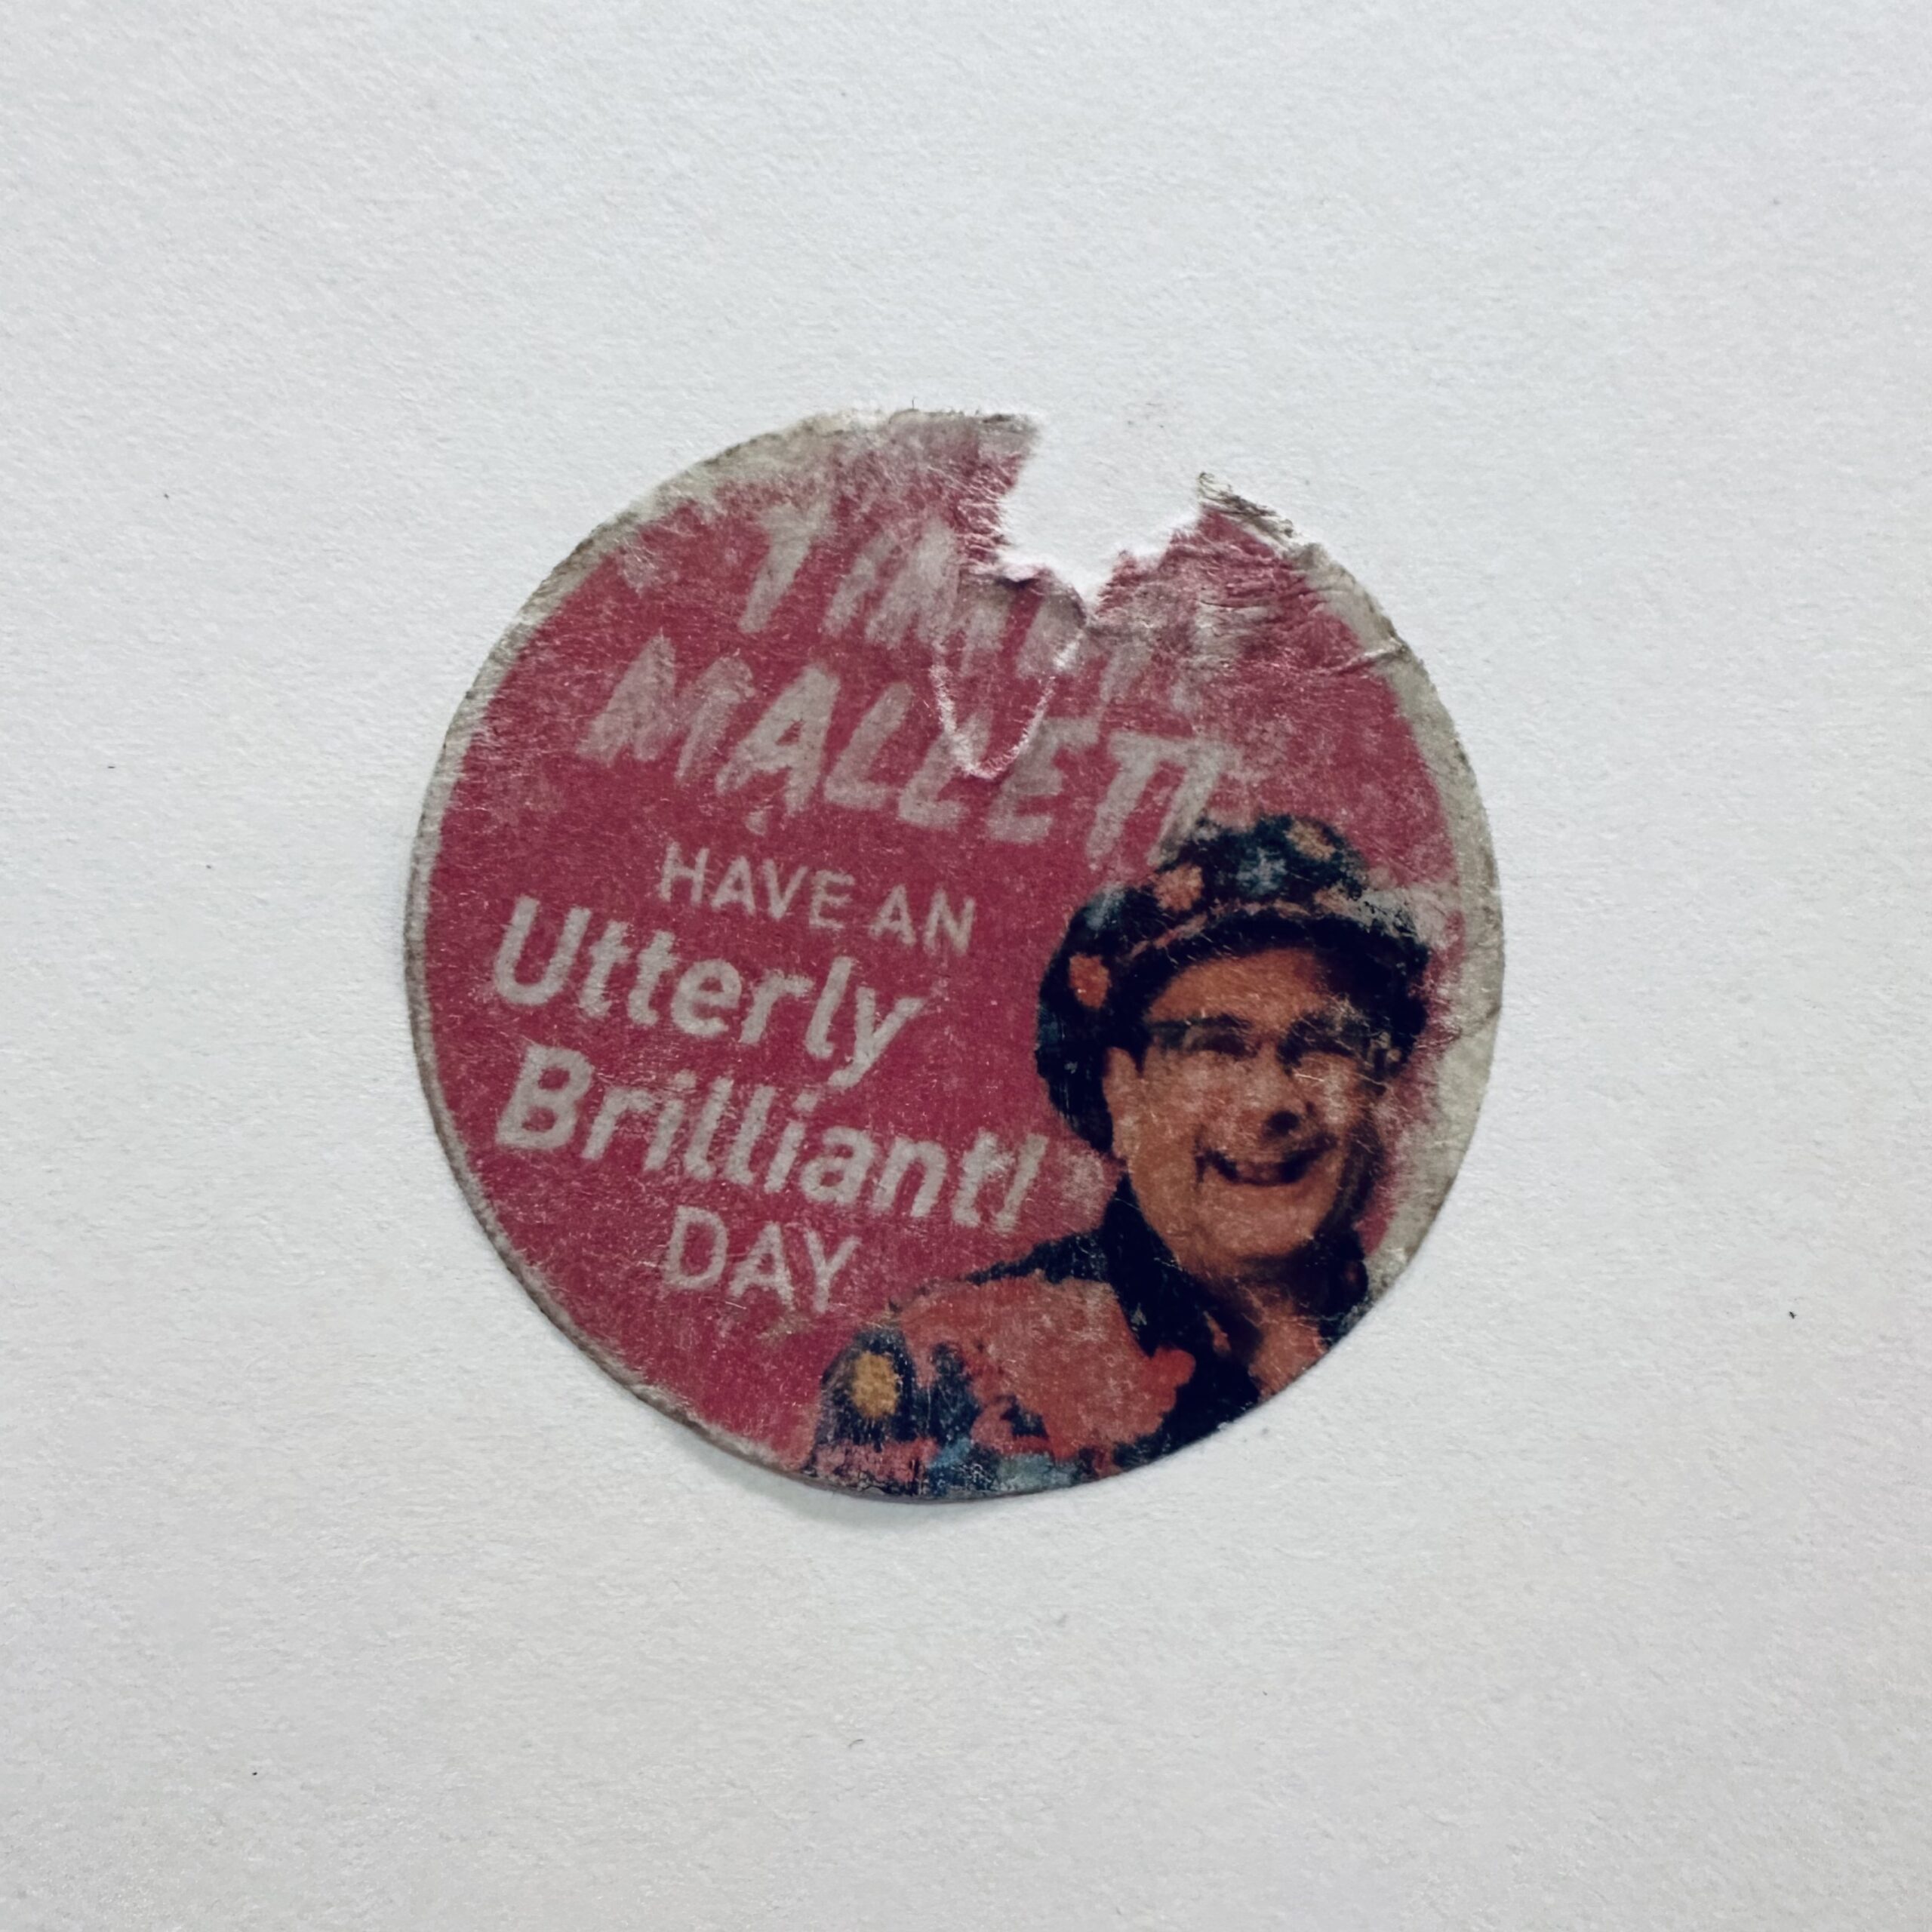 a Timmy Mallet sticker